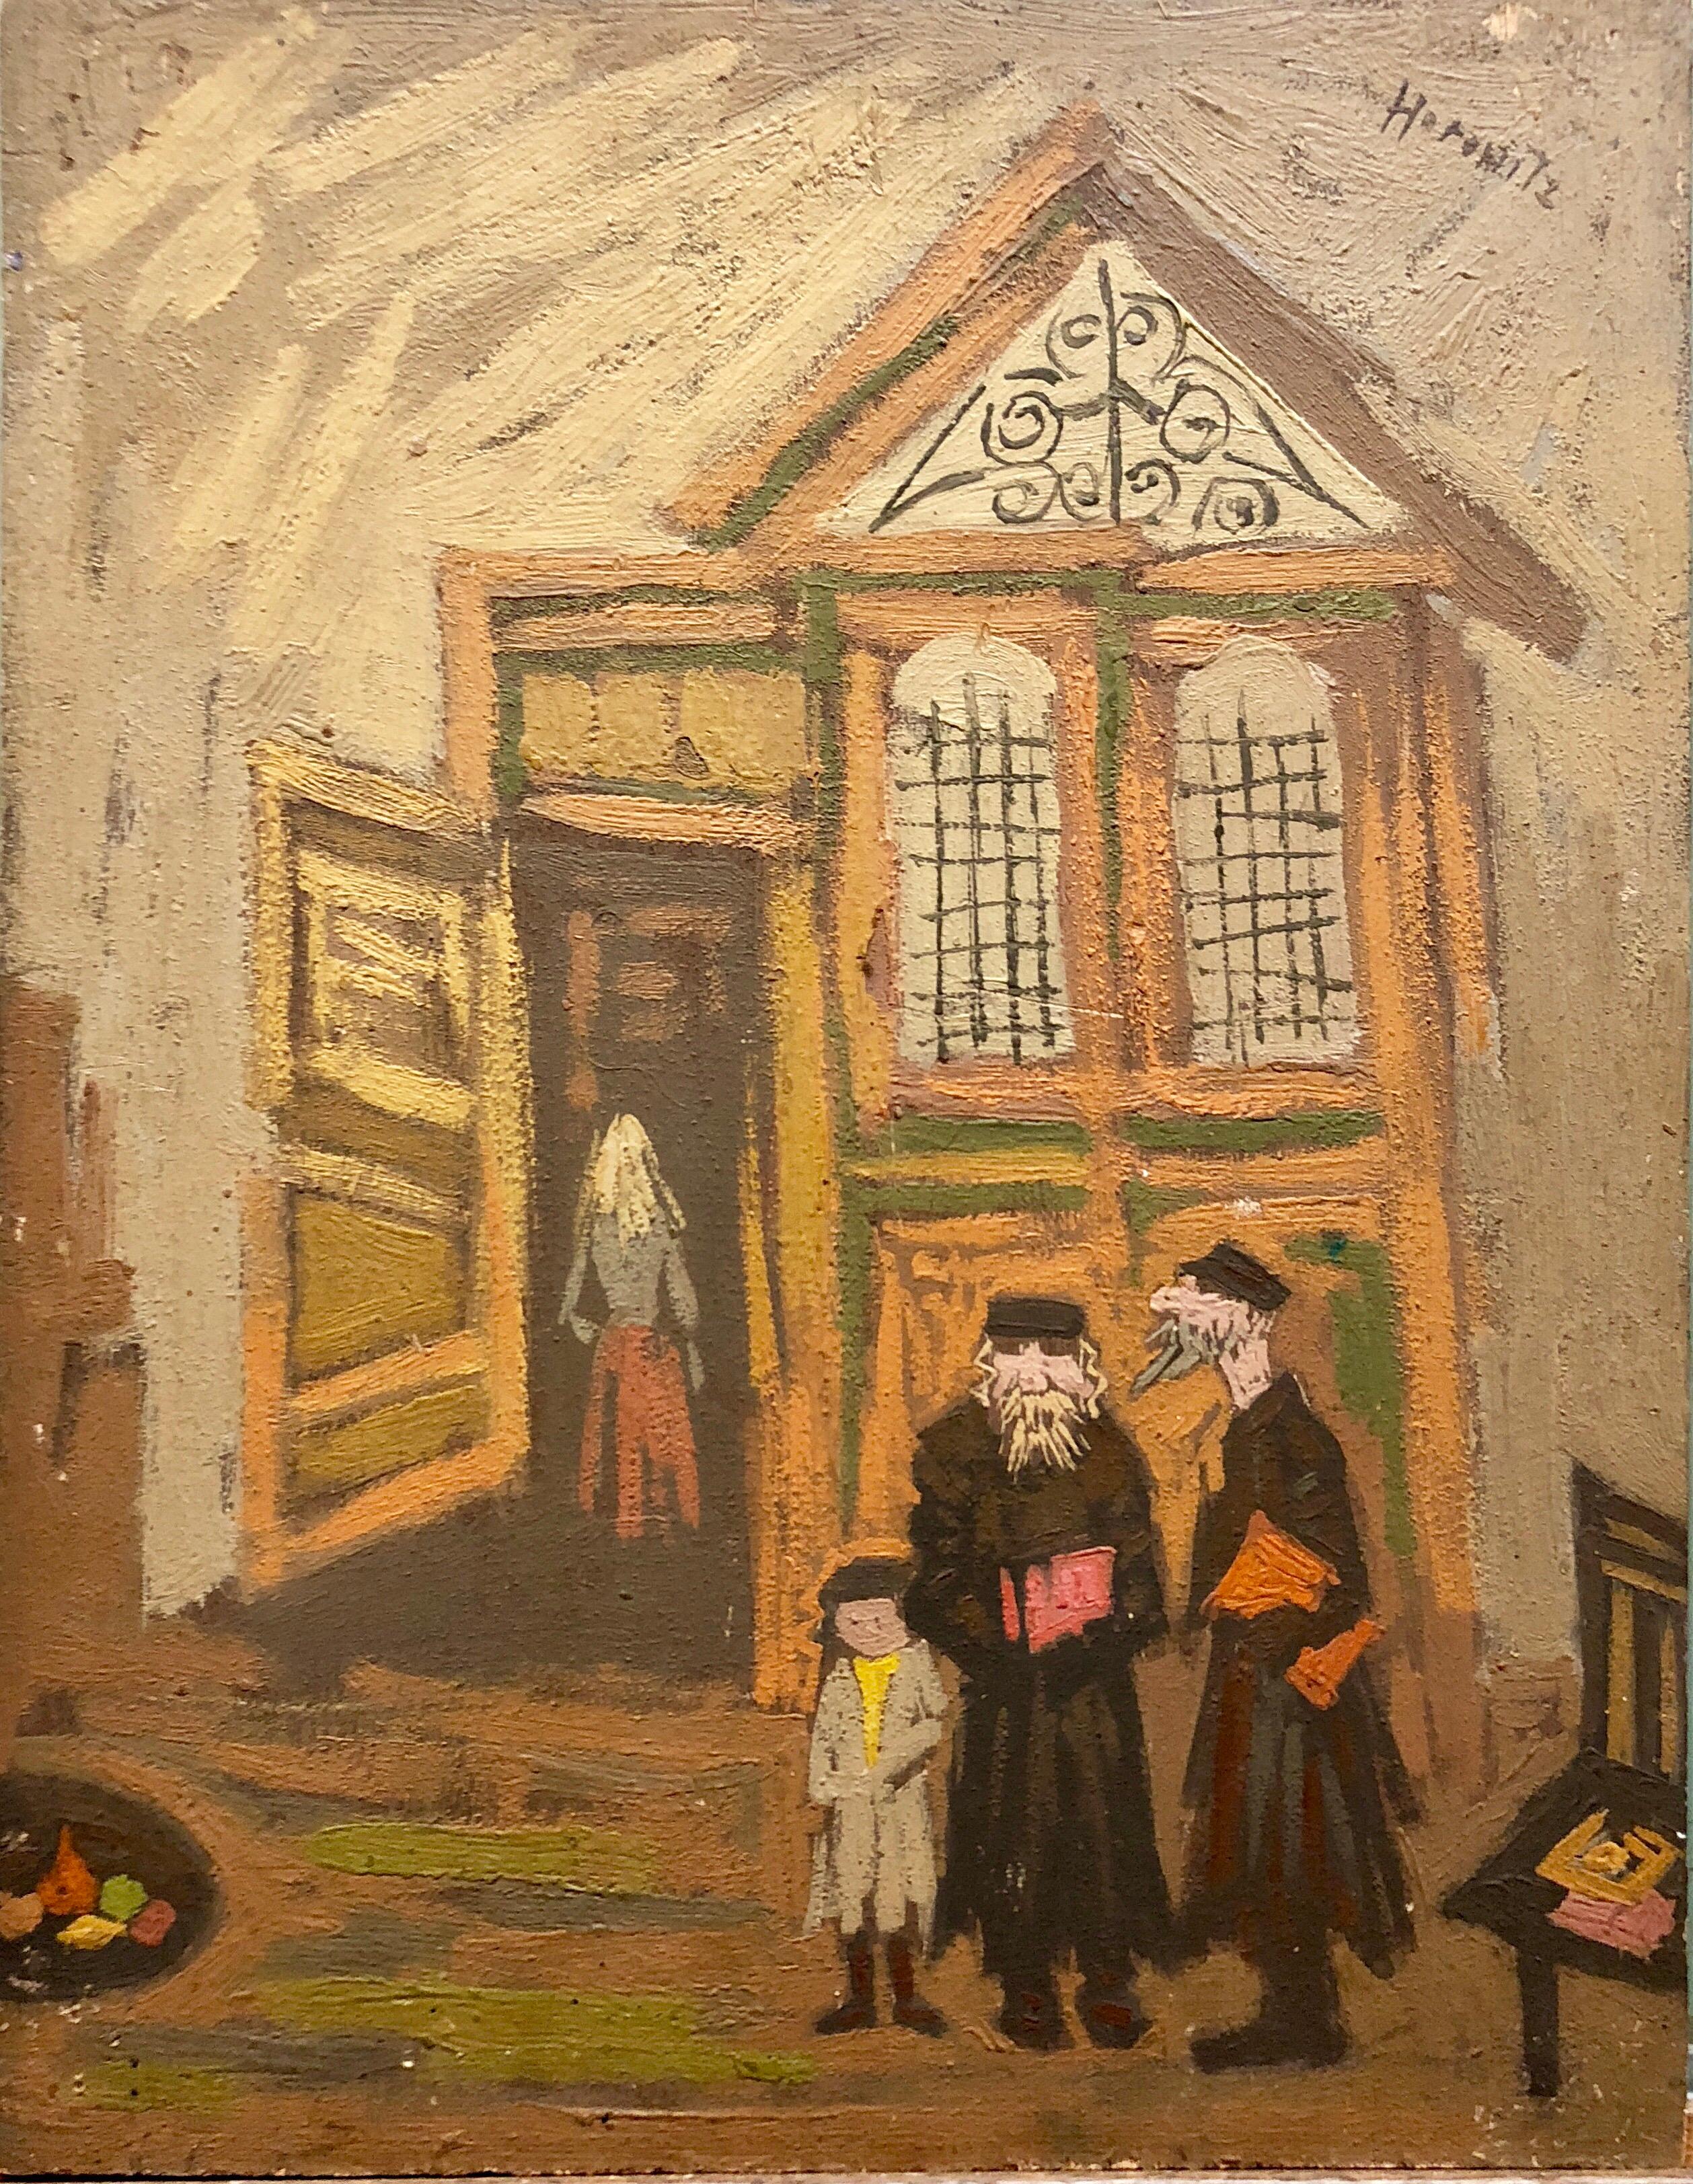 Peter Horowitz Figurative Painting - Judaica Oil Painting Jewish Family Interior Shtetl Scene